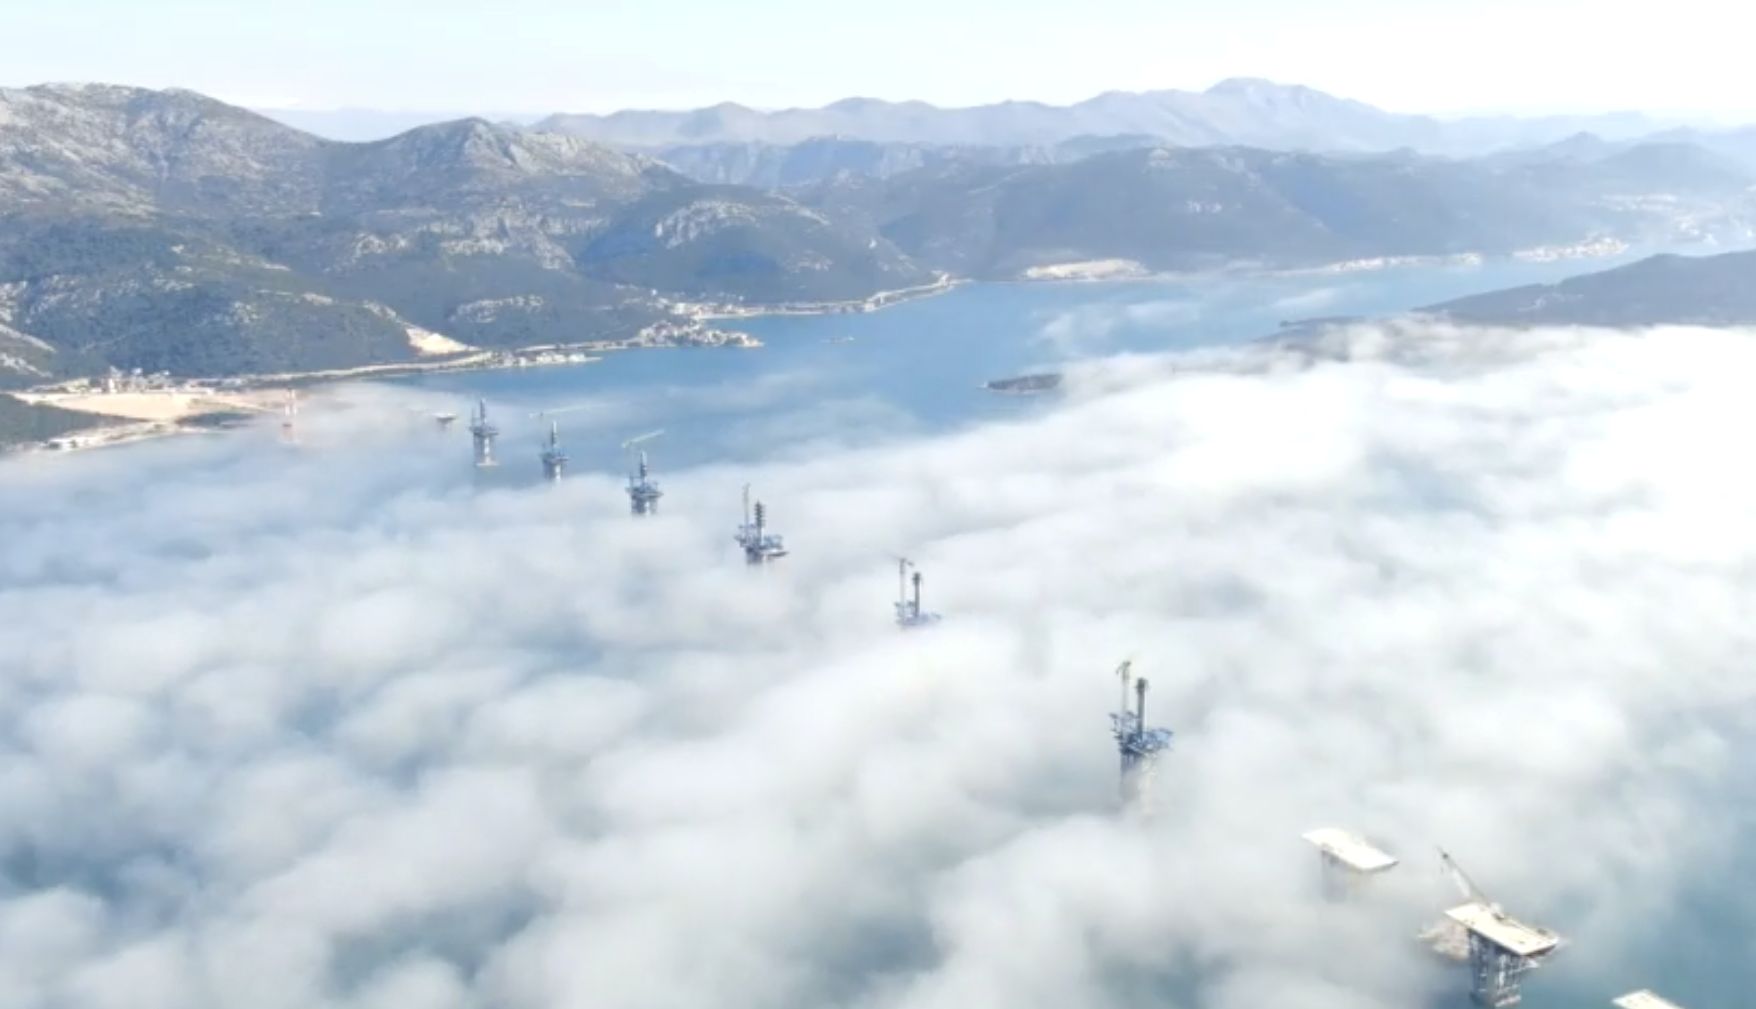 Check out latest Pelješac bridge video in amazing fog 